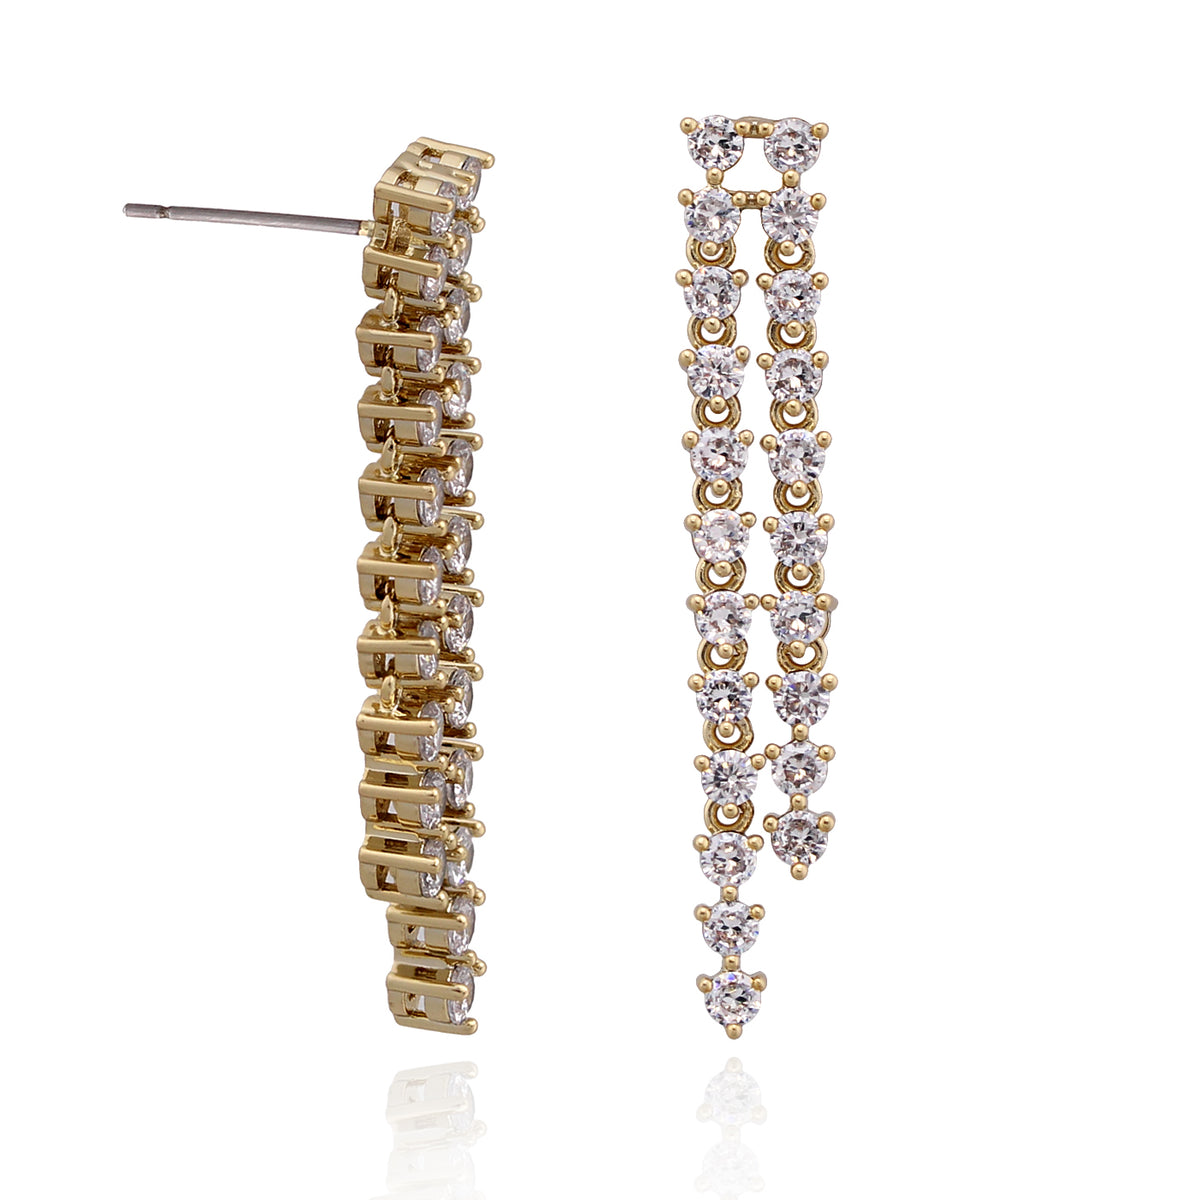 Two strand tennis style dangle earrings